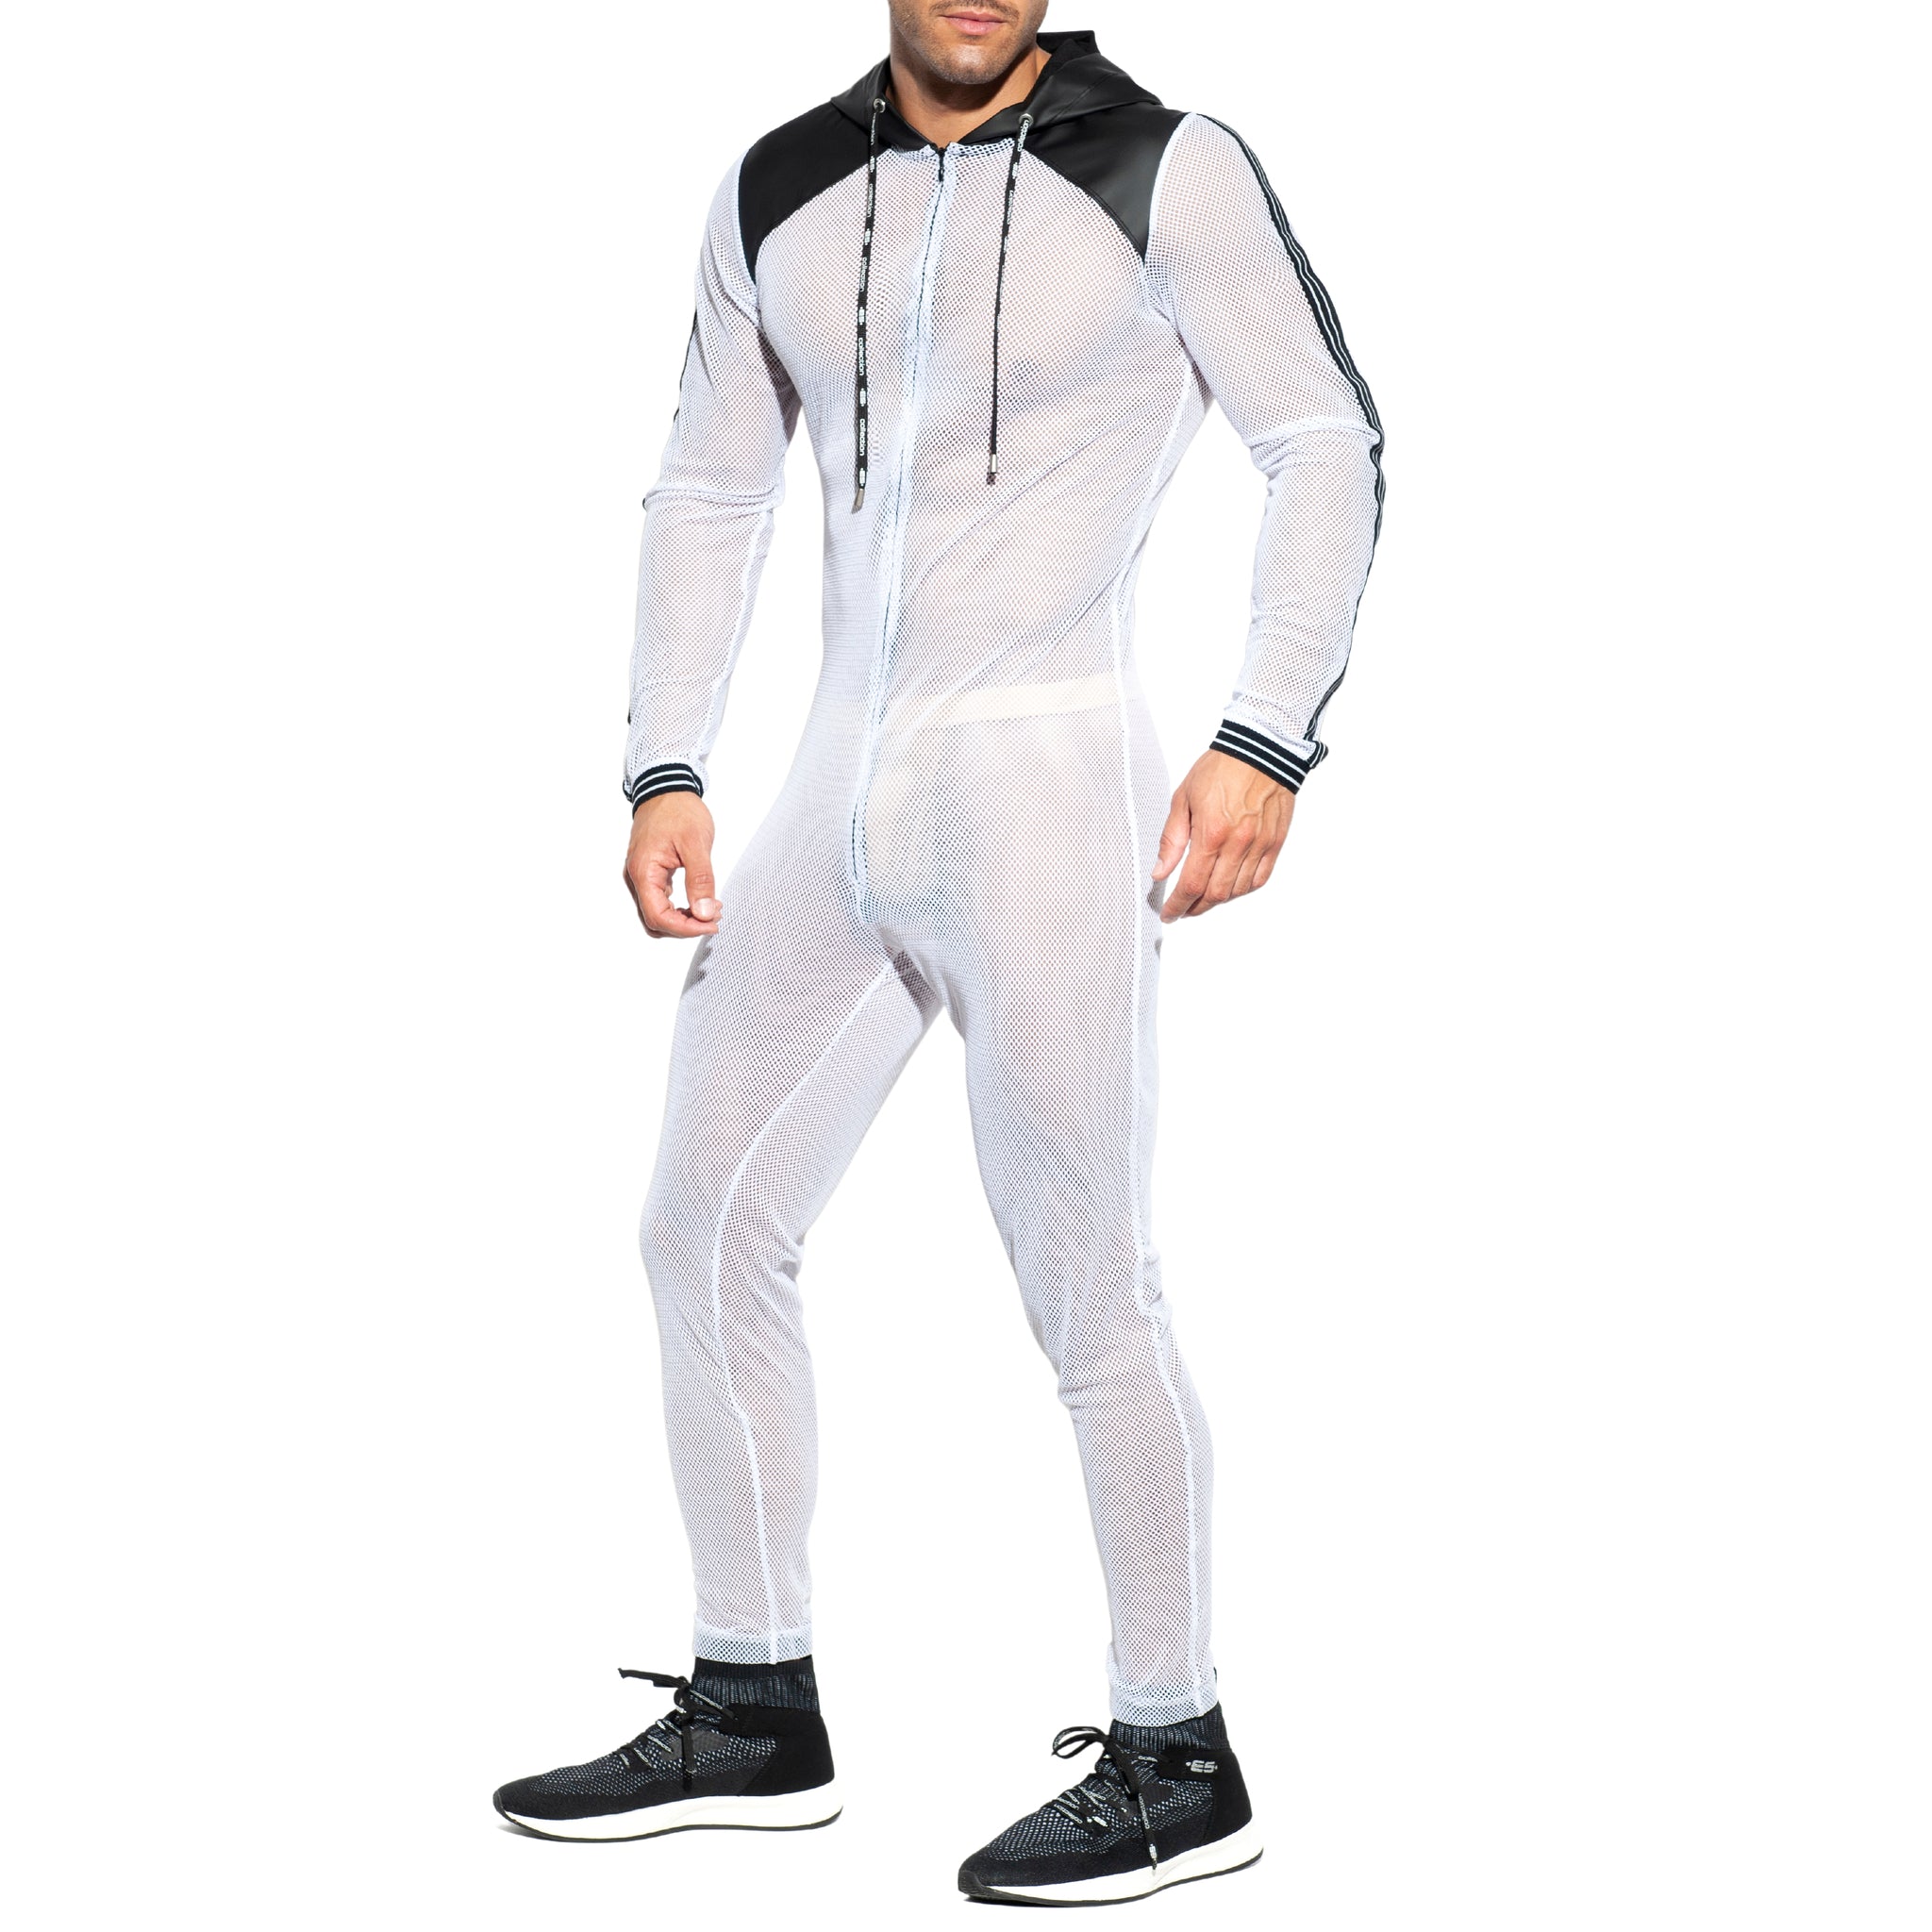 ES Collection Dystopia Mesh Suit White SP205